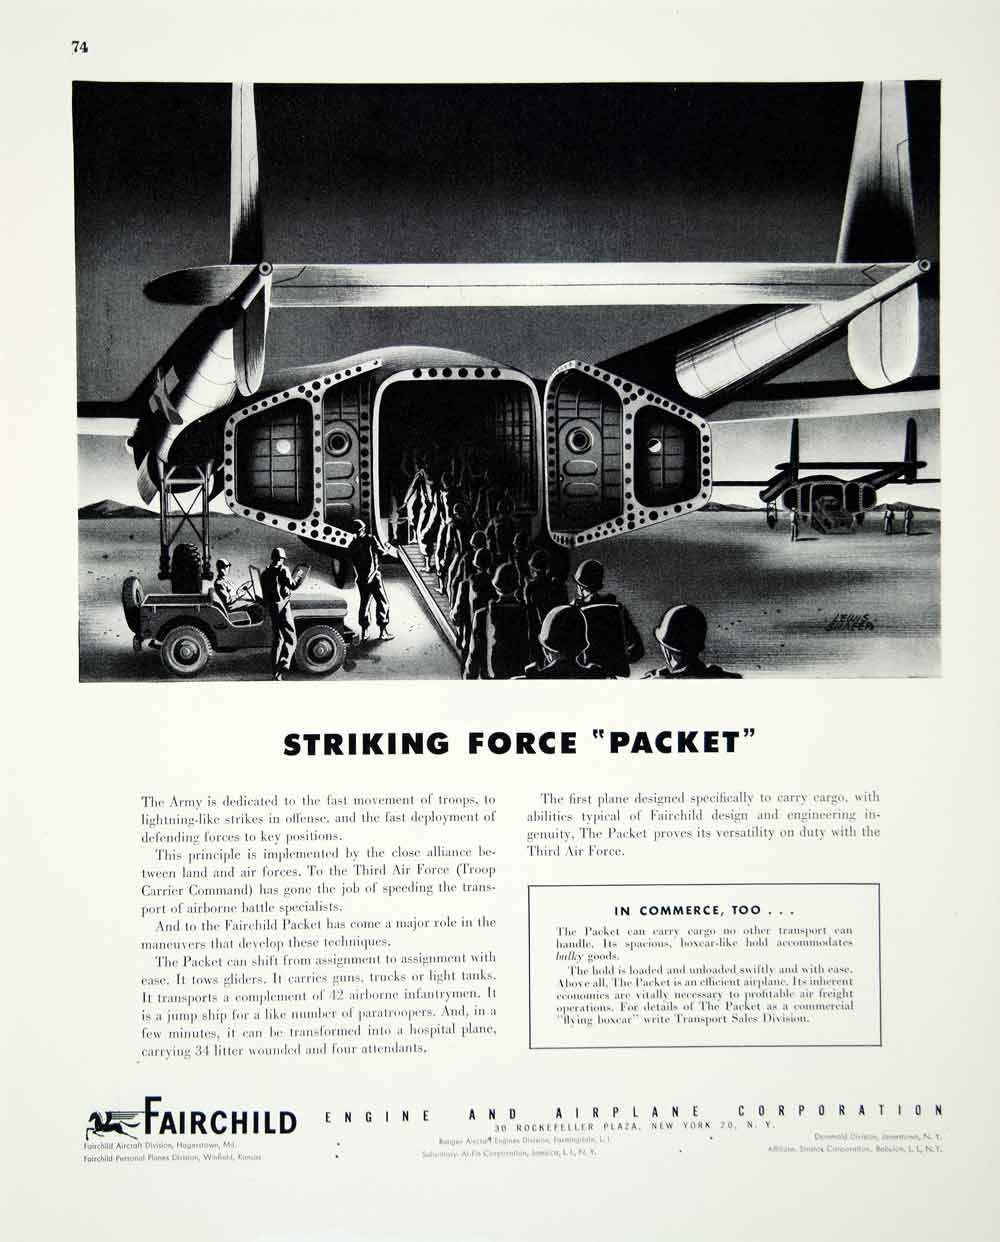 1946 Ad Fairchild Engine Airplane Corporation Travel Transportation Packet FTM1